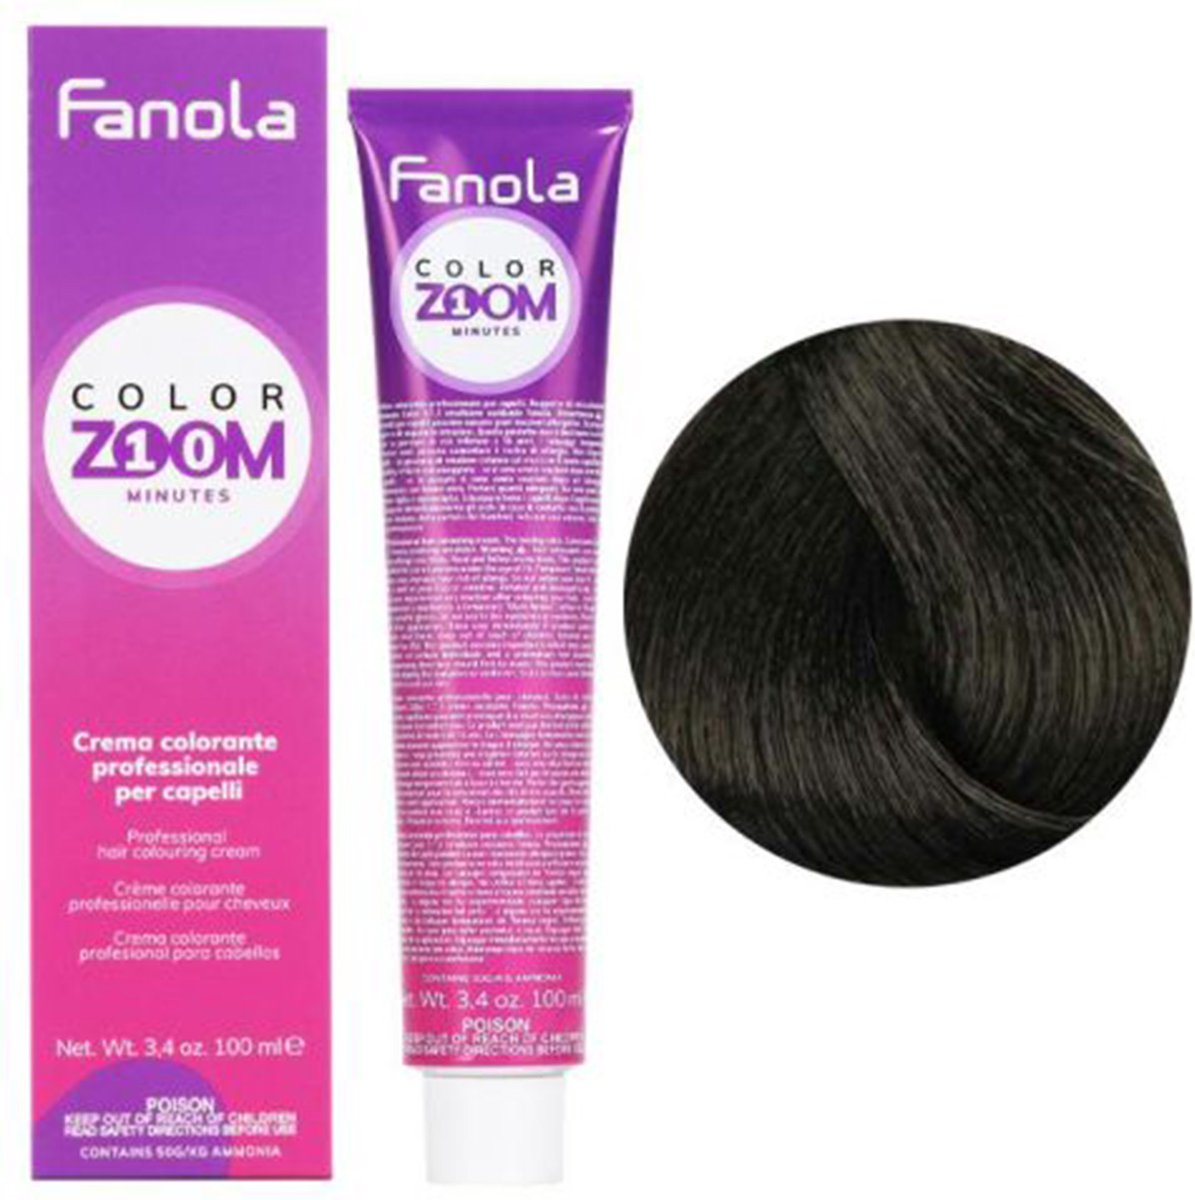 Fanola - Color Zoom - 100 ml - 4.71